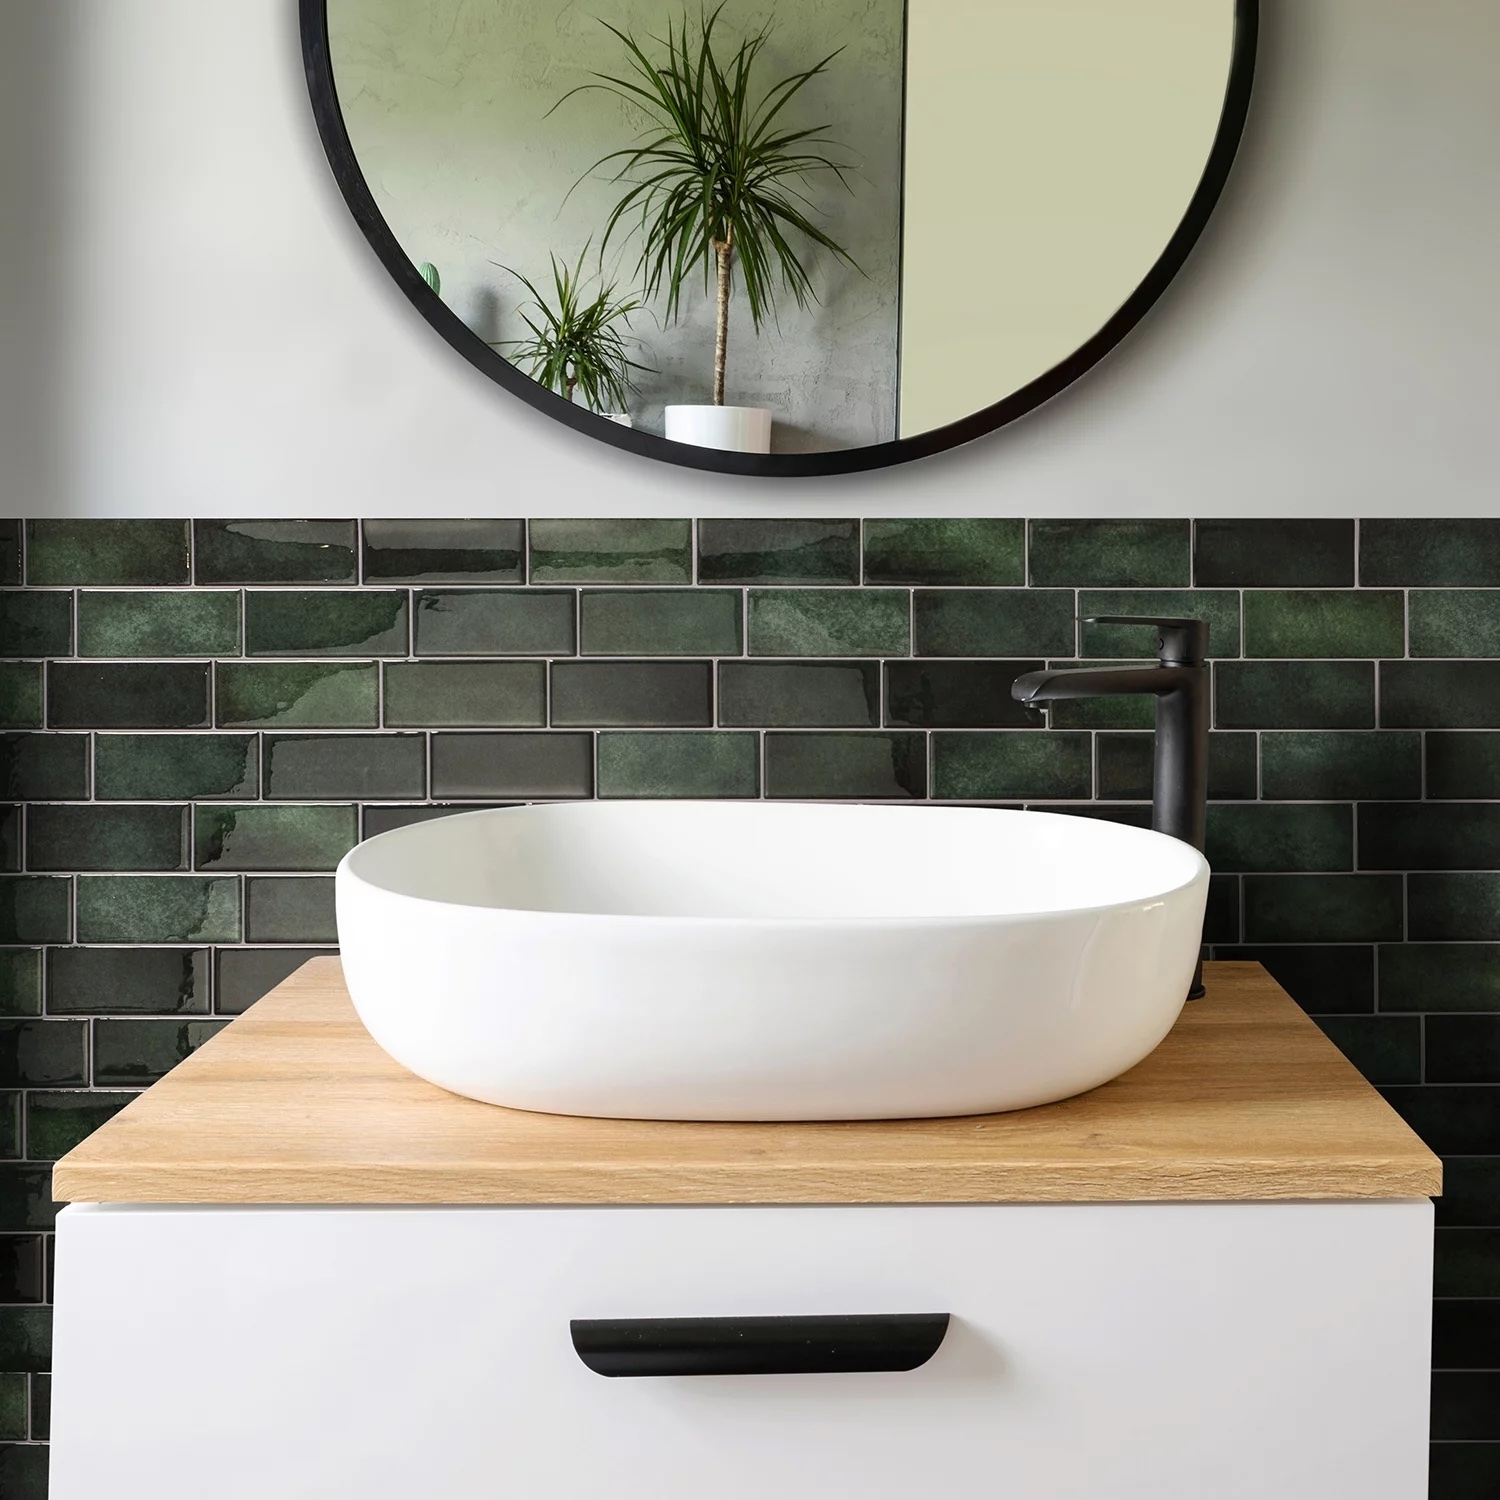 Green backsplash behind a modern bathroom vanity with a round black mirror above it